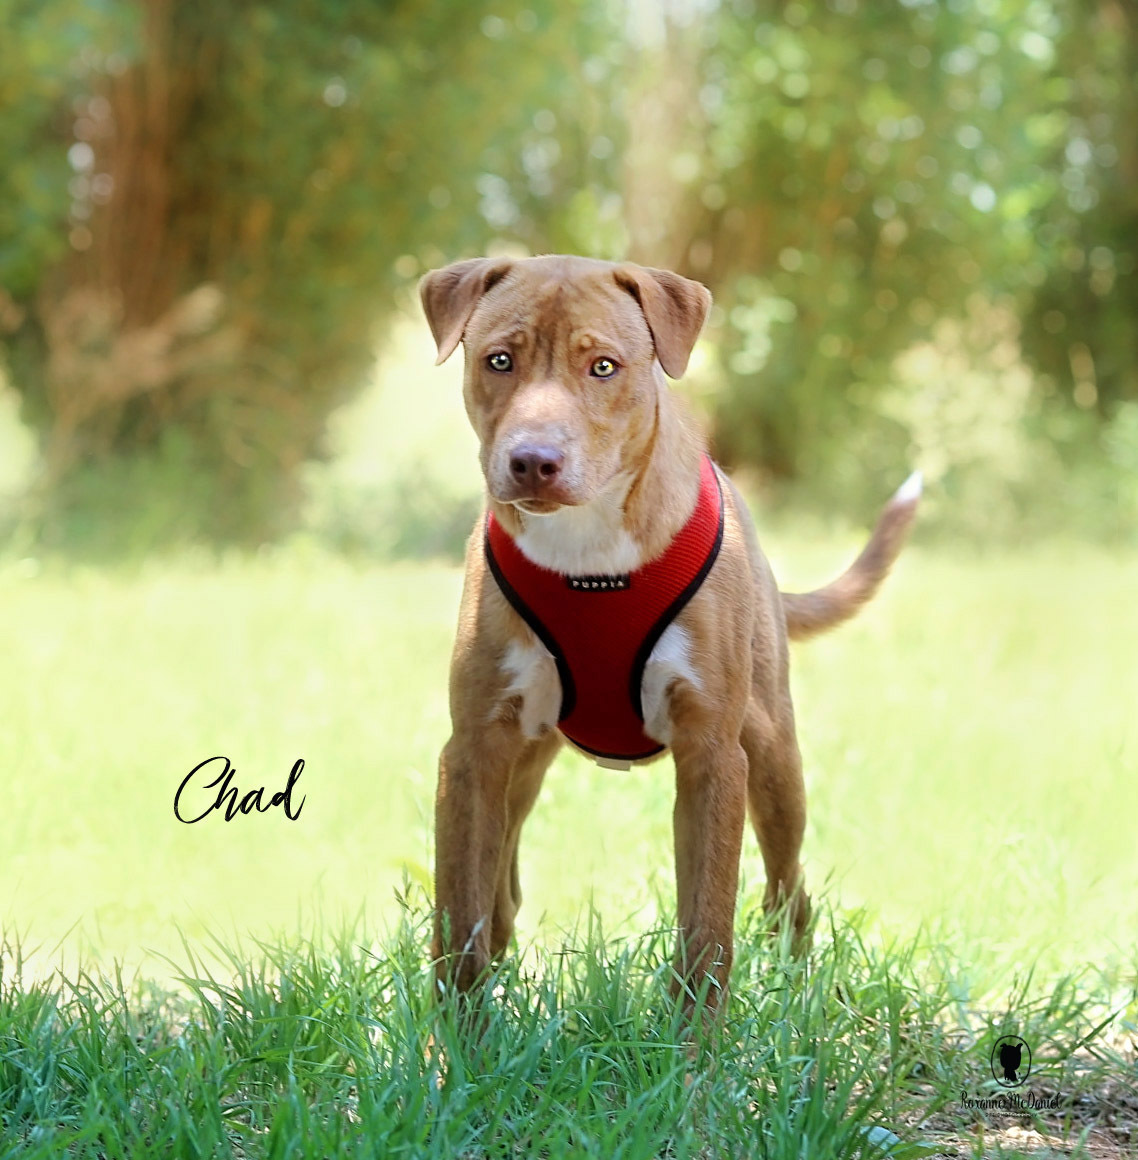 CHAD, an adoptable Labrador Retriever in Lubbock, TX, 79407 | Photo Image 1